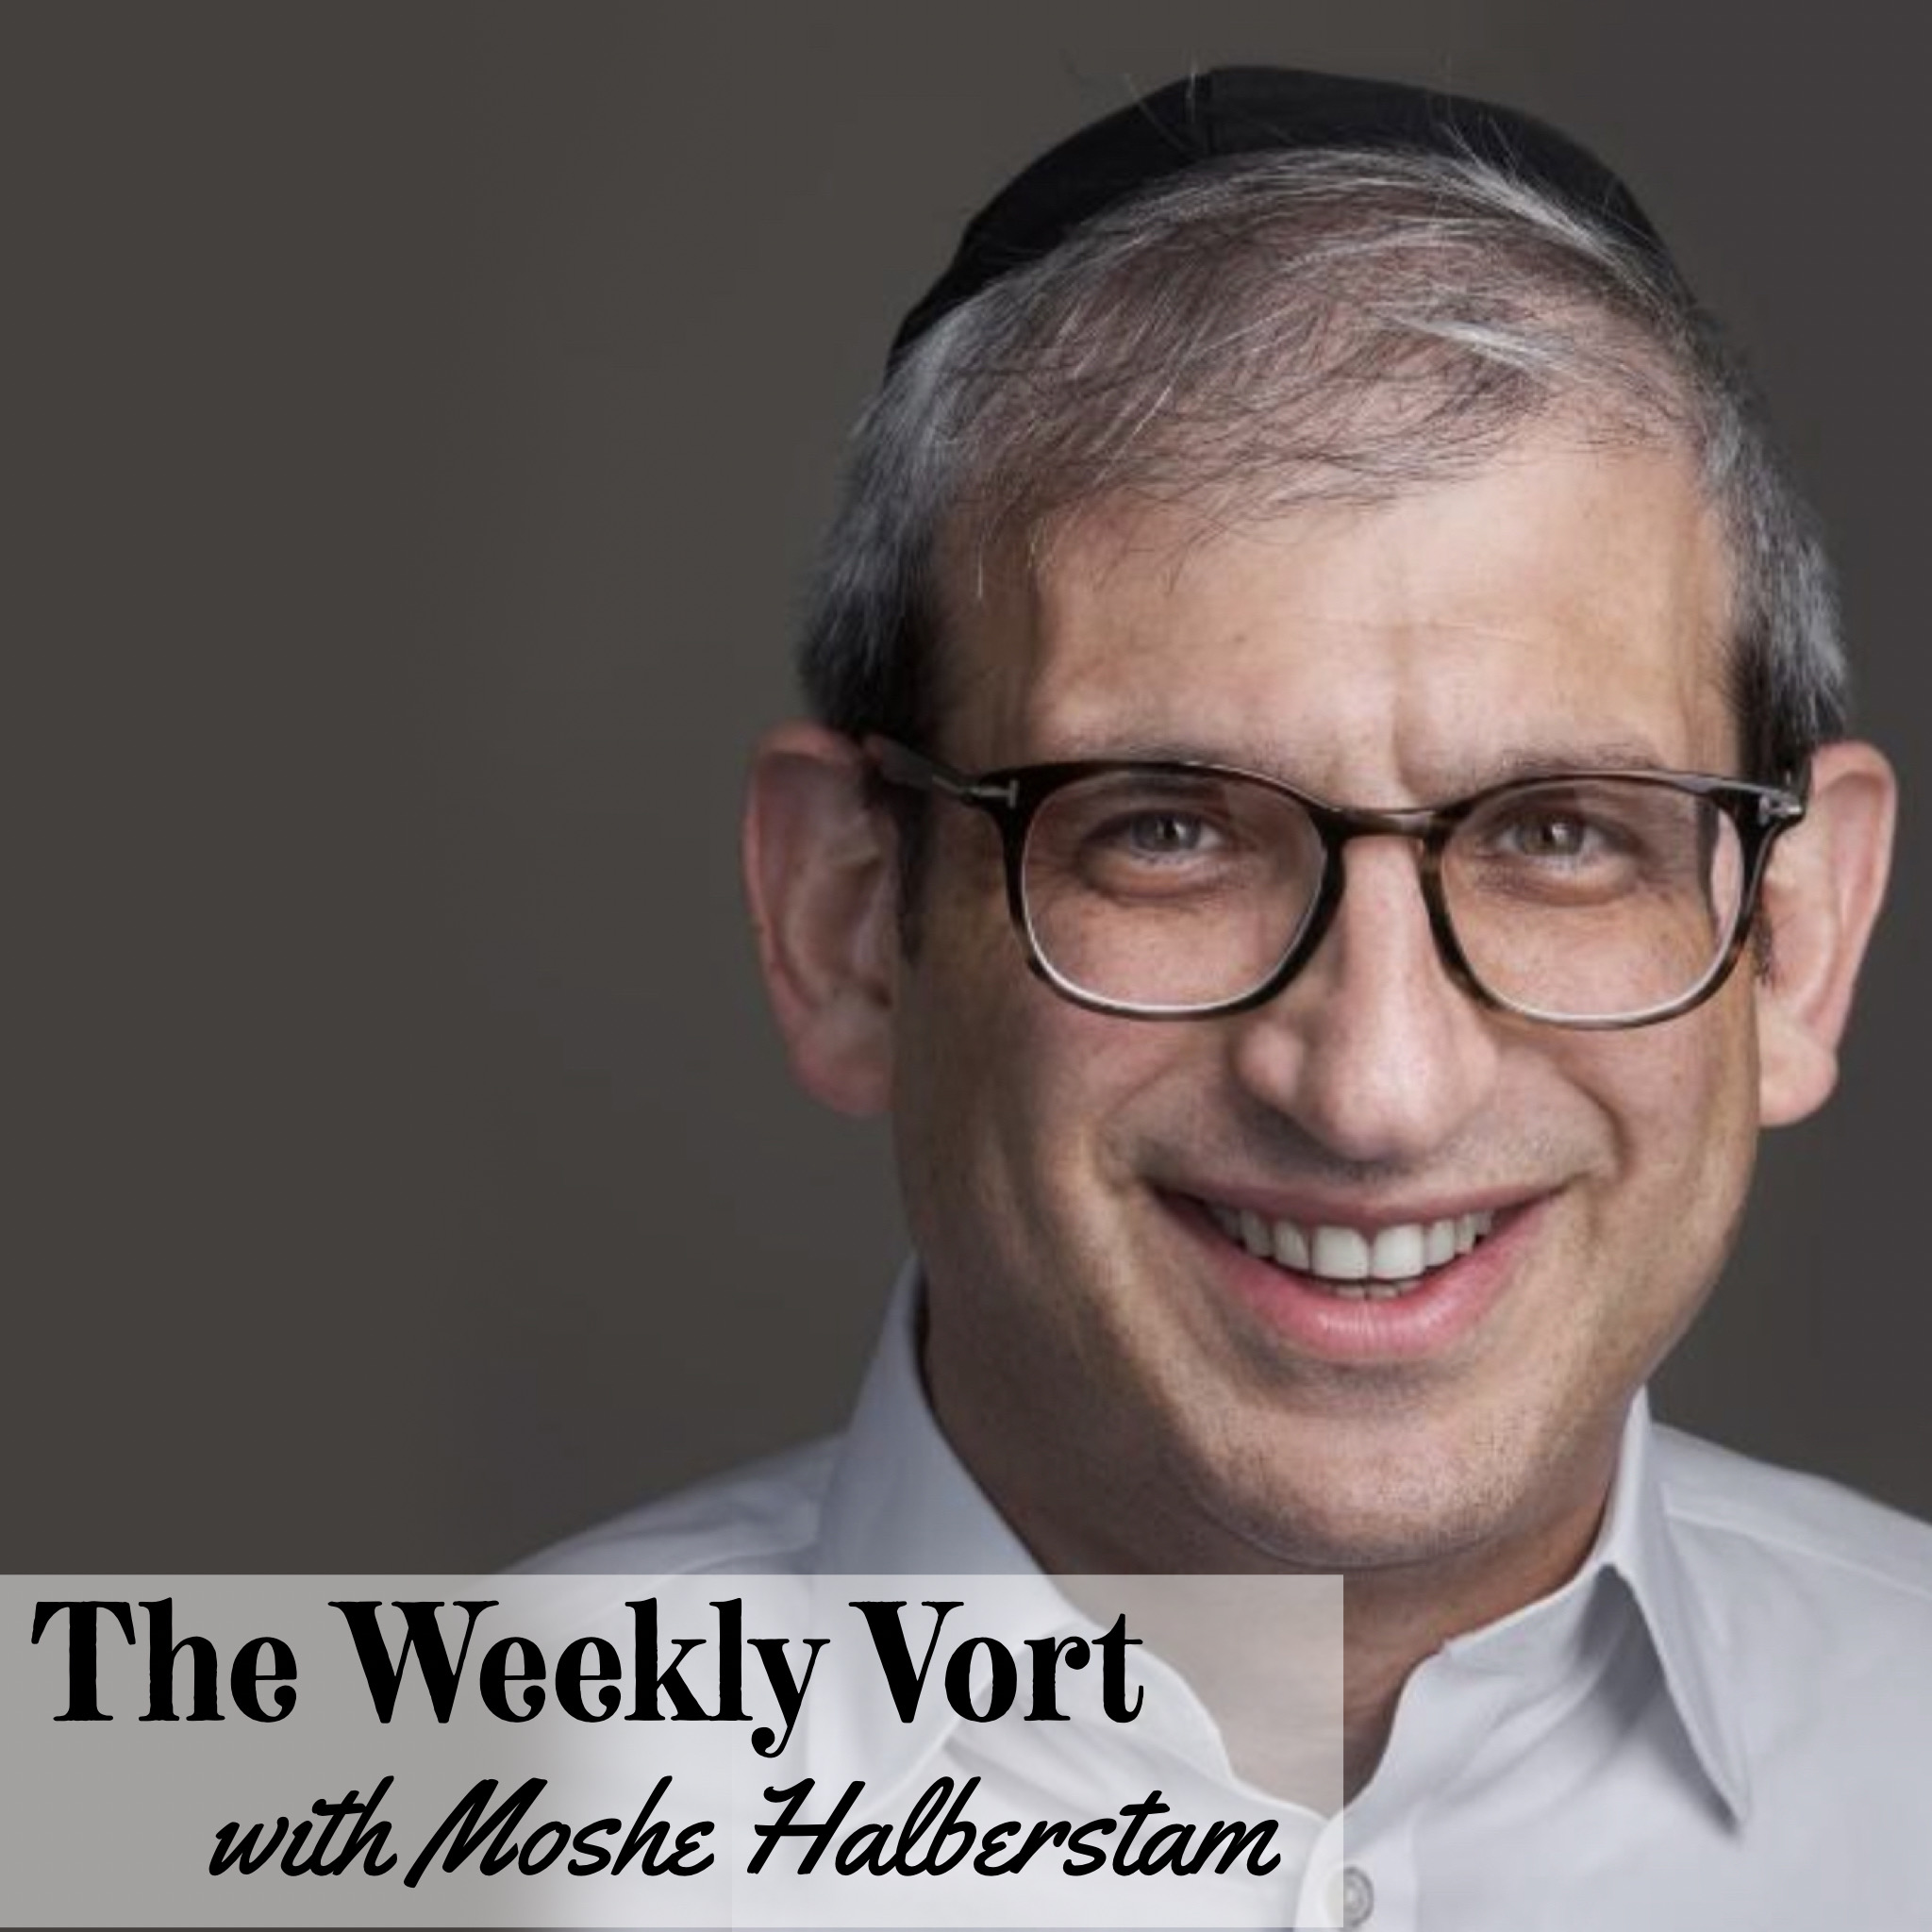 The Weekly Vort with Moshe Halberstam